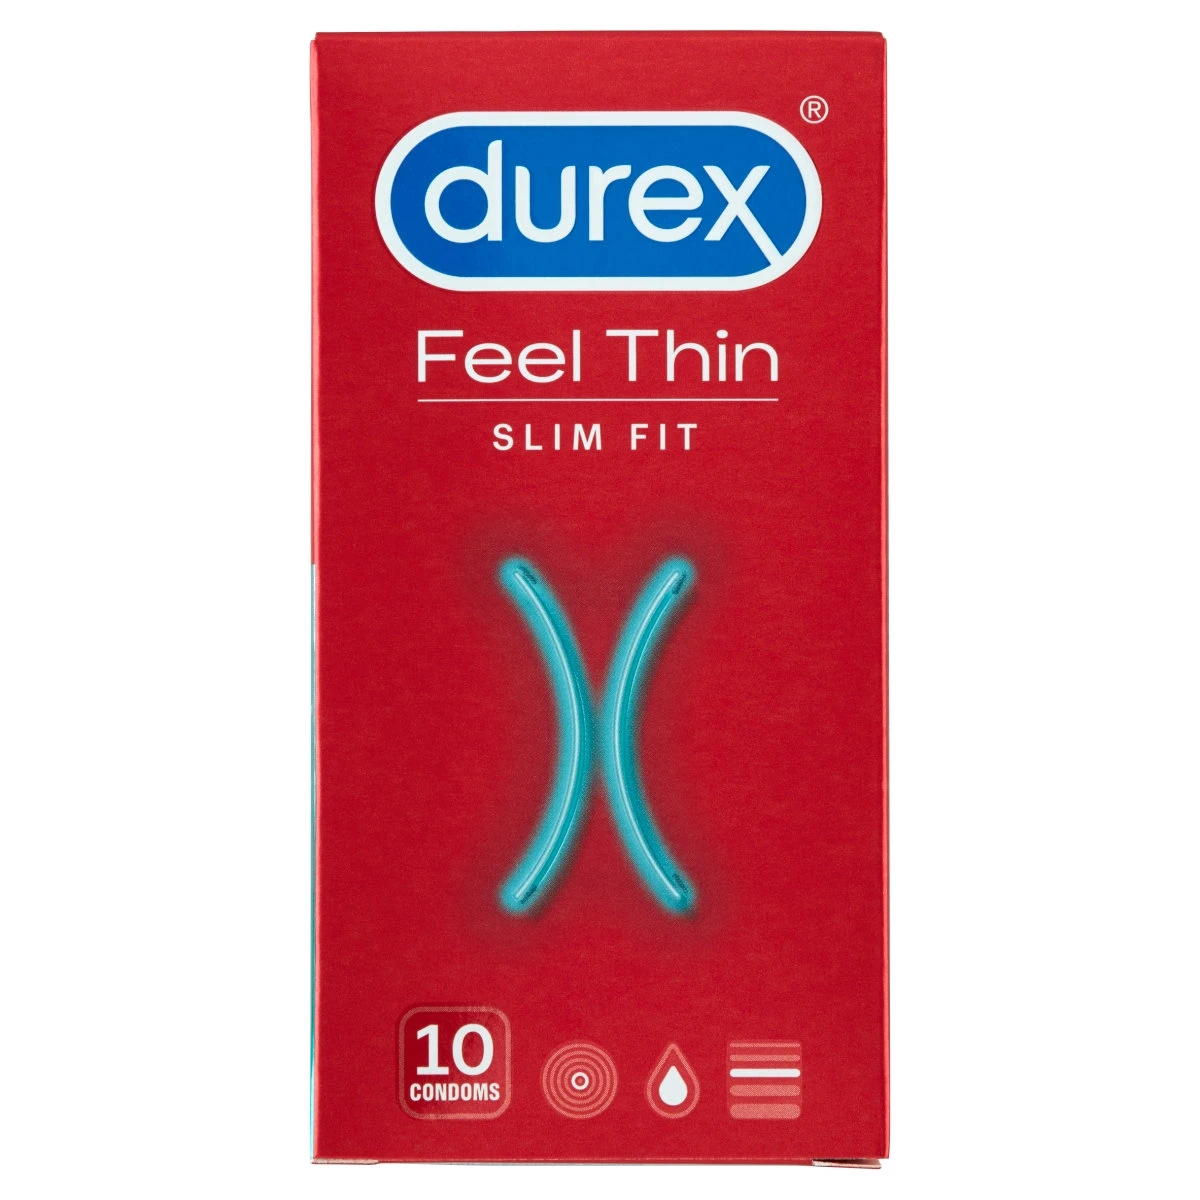 Durex Óvszer, feel thin slim fit, 10 db